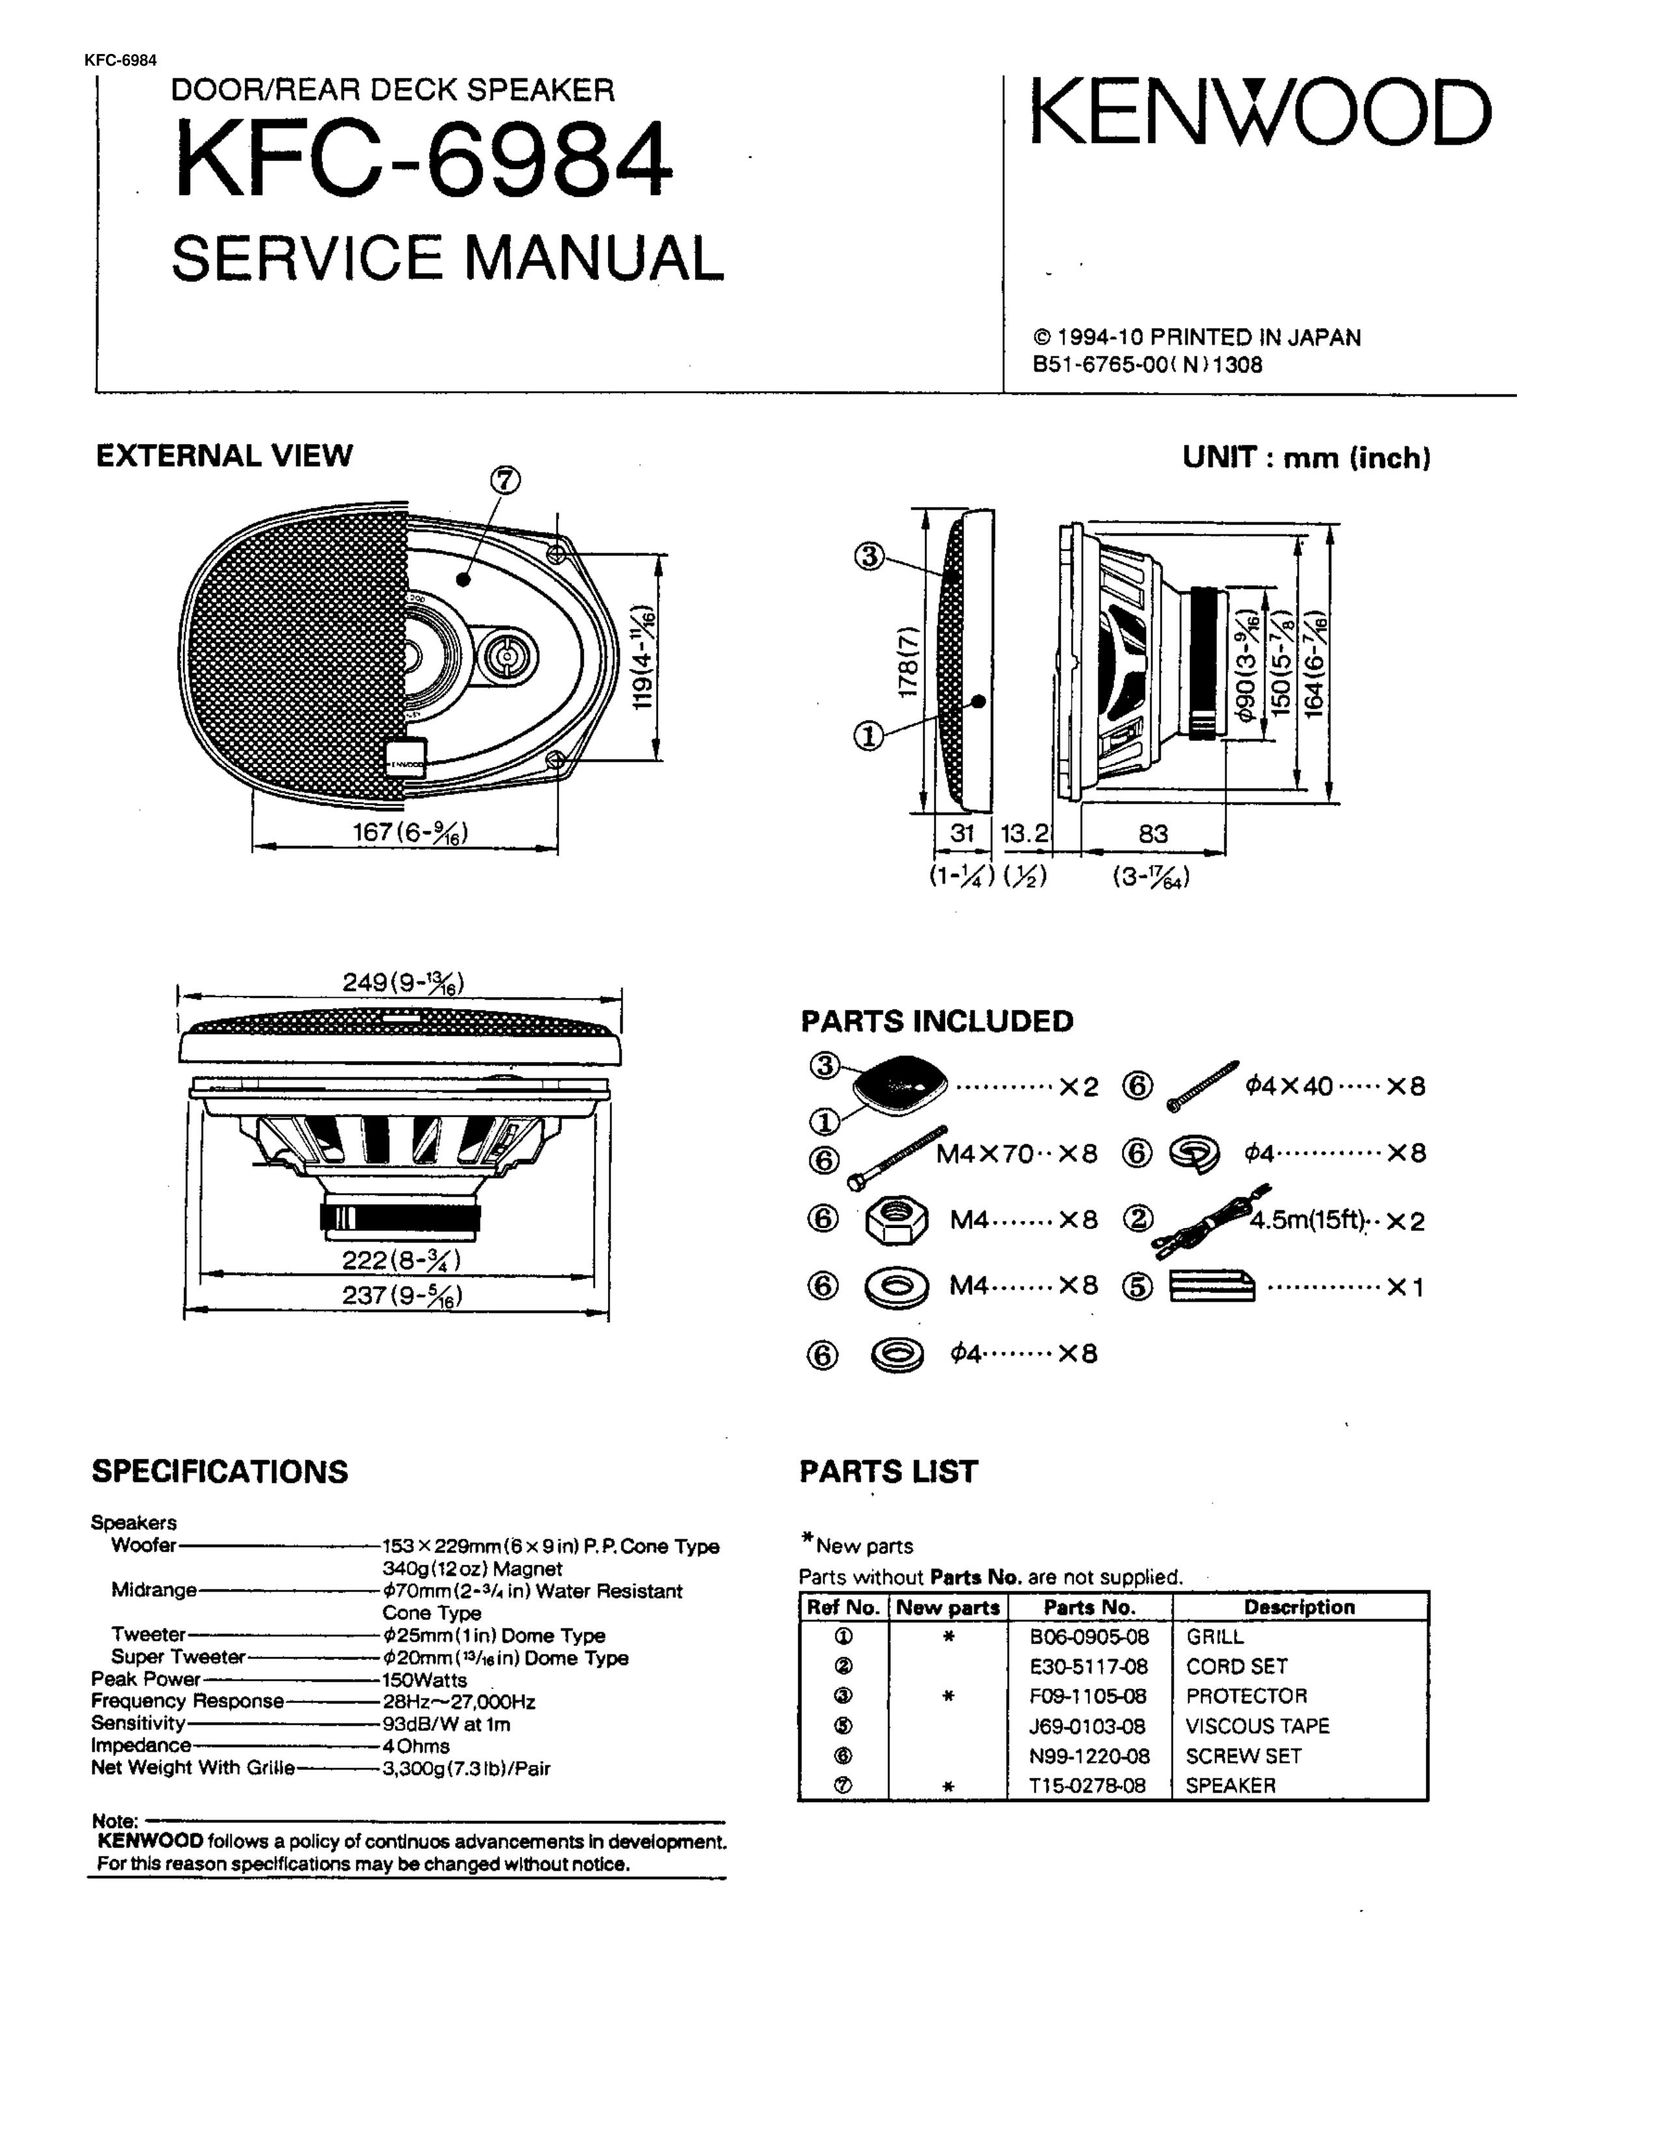 Kenwood KFC-6984 Car Speaker User Manual